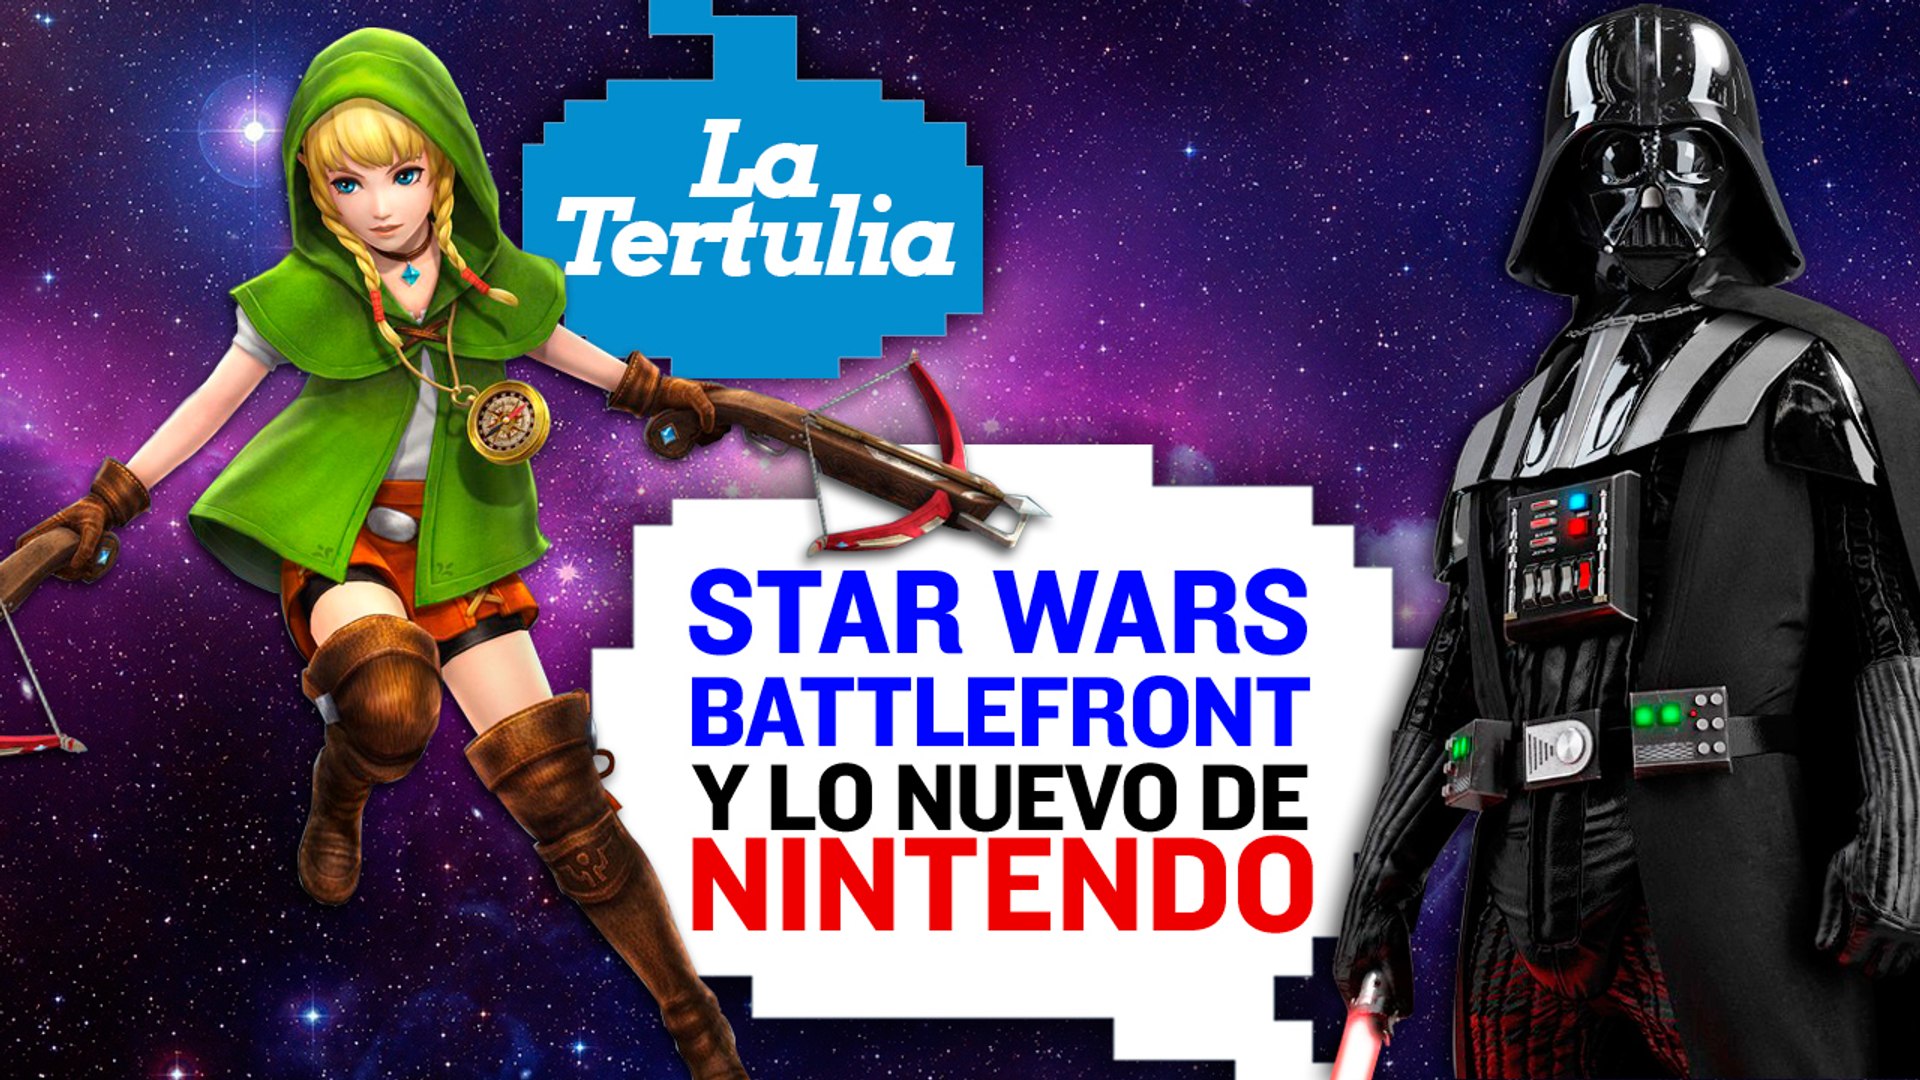 La Tertulia Star Wars Battlefront y Zelda Wii U - Vídeo Dailymotion